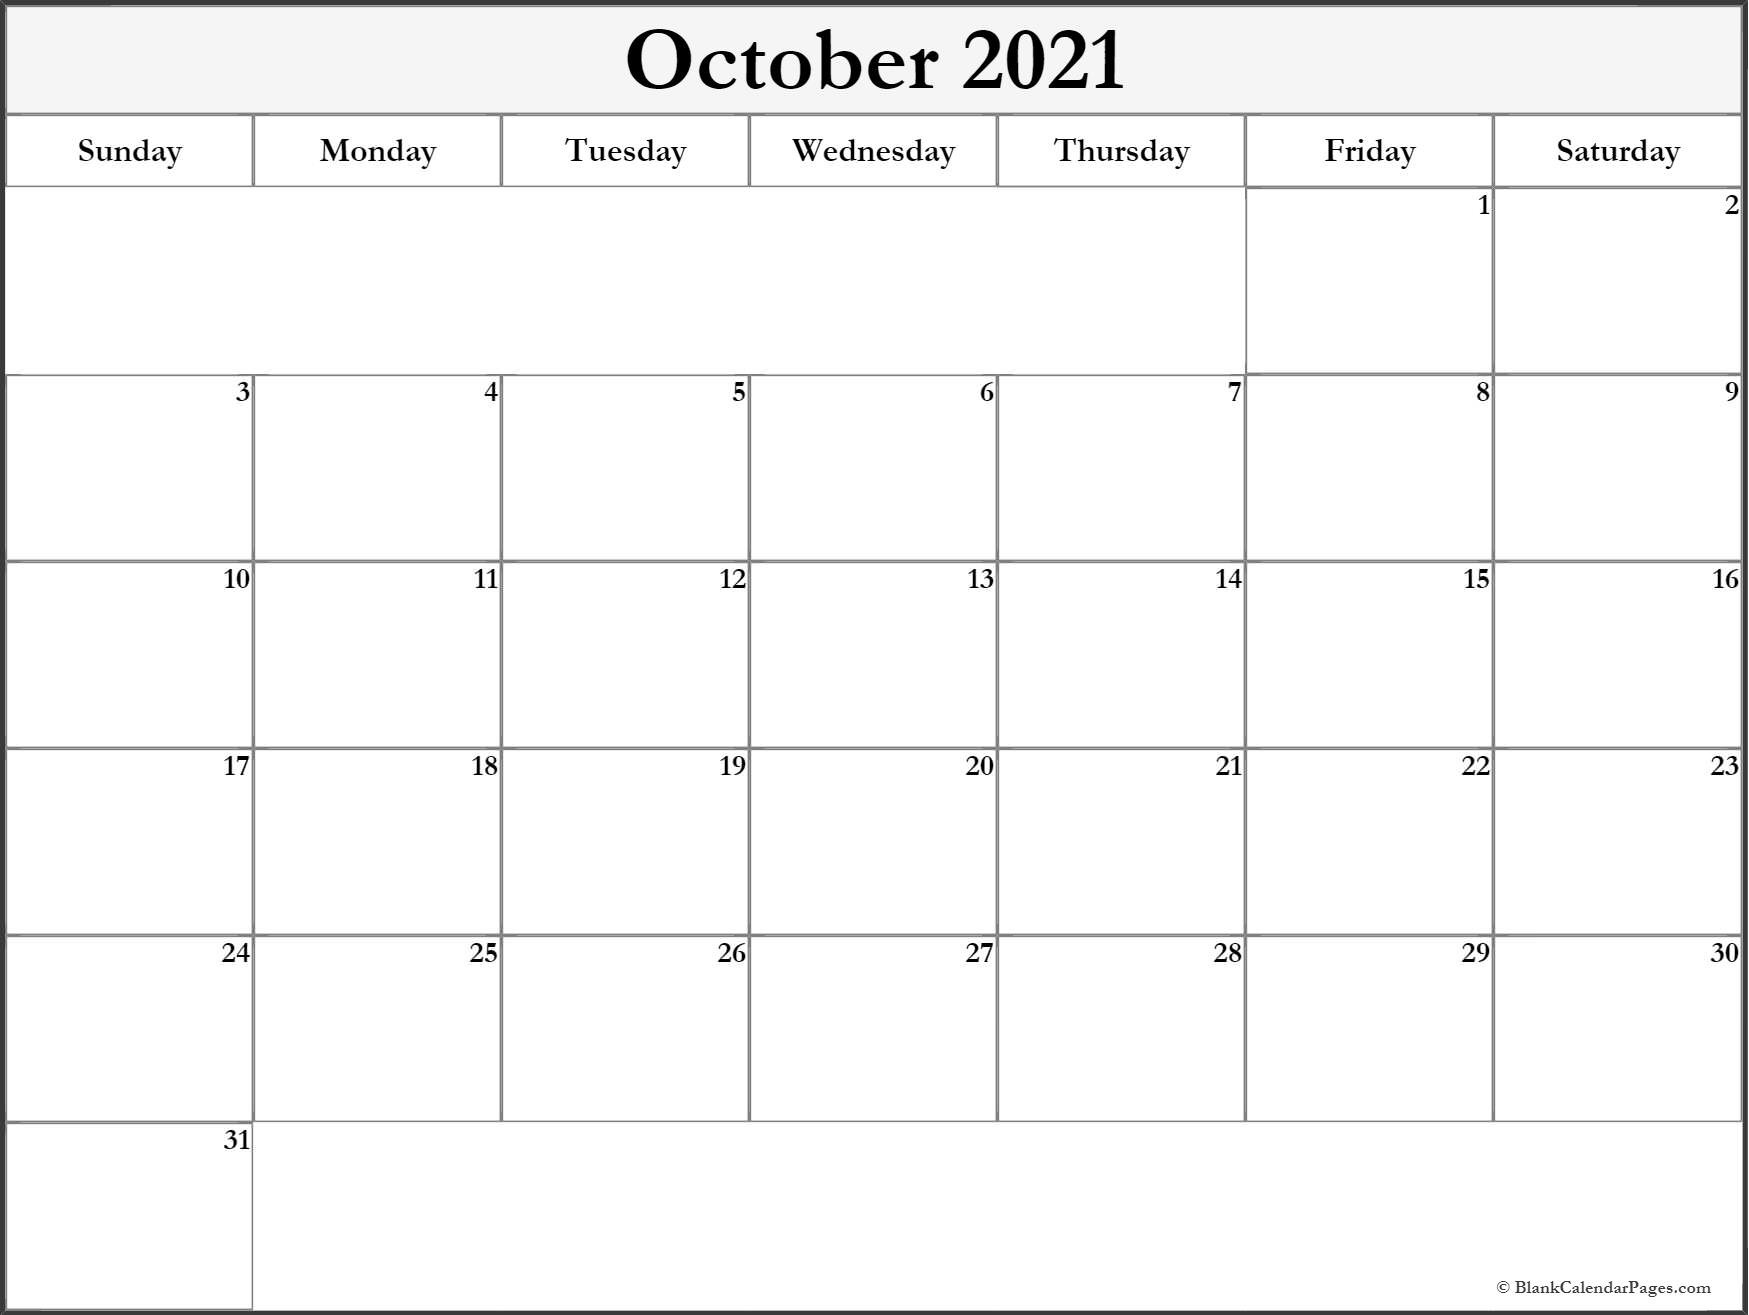 October 2021 Blank Calendar Templates.-2021 Calendar With Large Squares